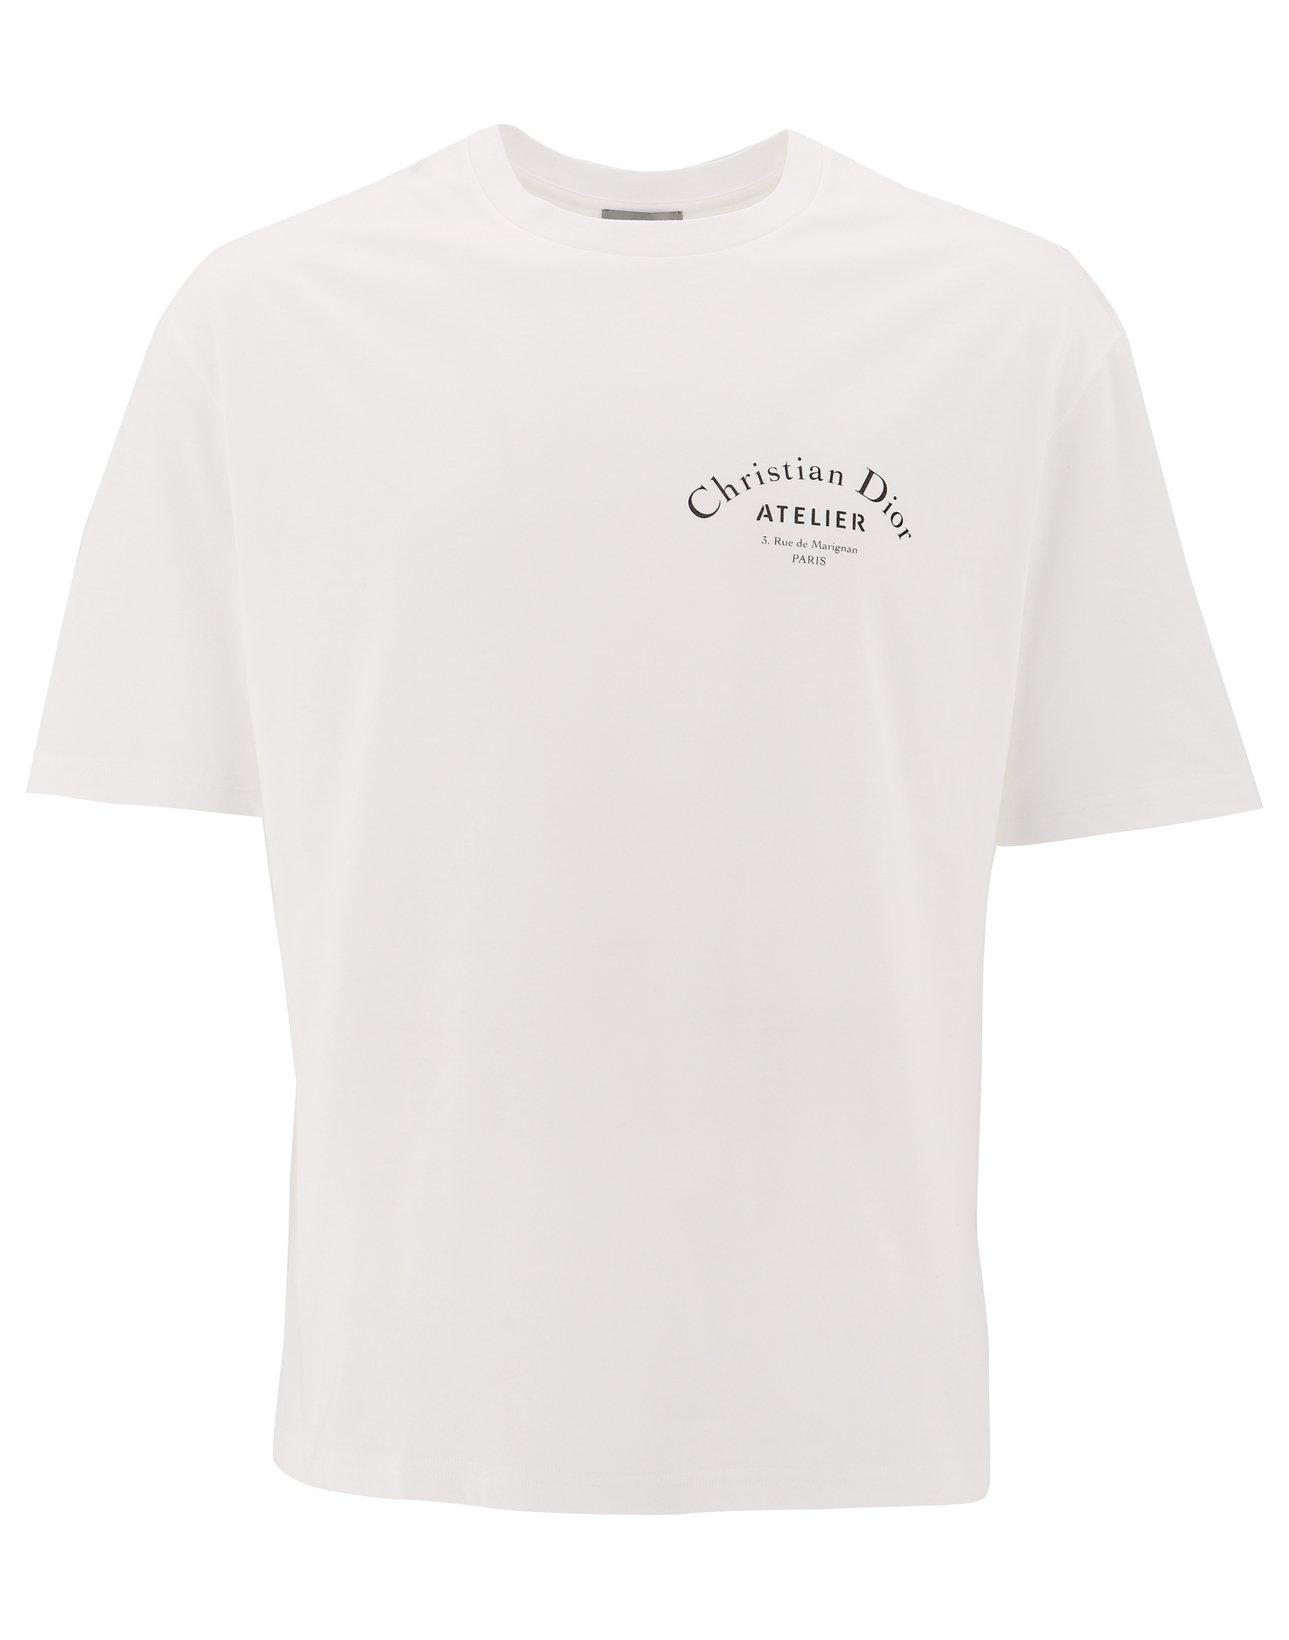 tijger Bewijzen Formuleren Dior Homme Christian Dior Atelier T-shirt in White for Men | Lyst